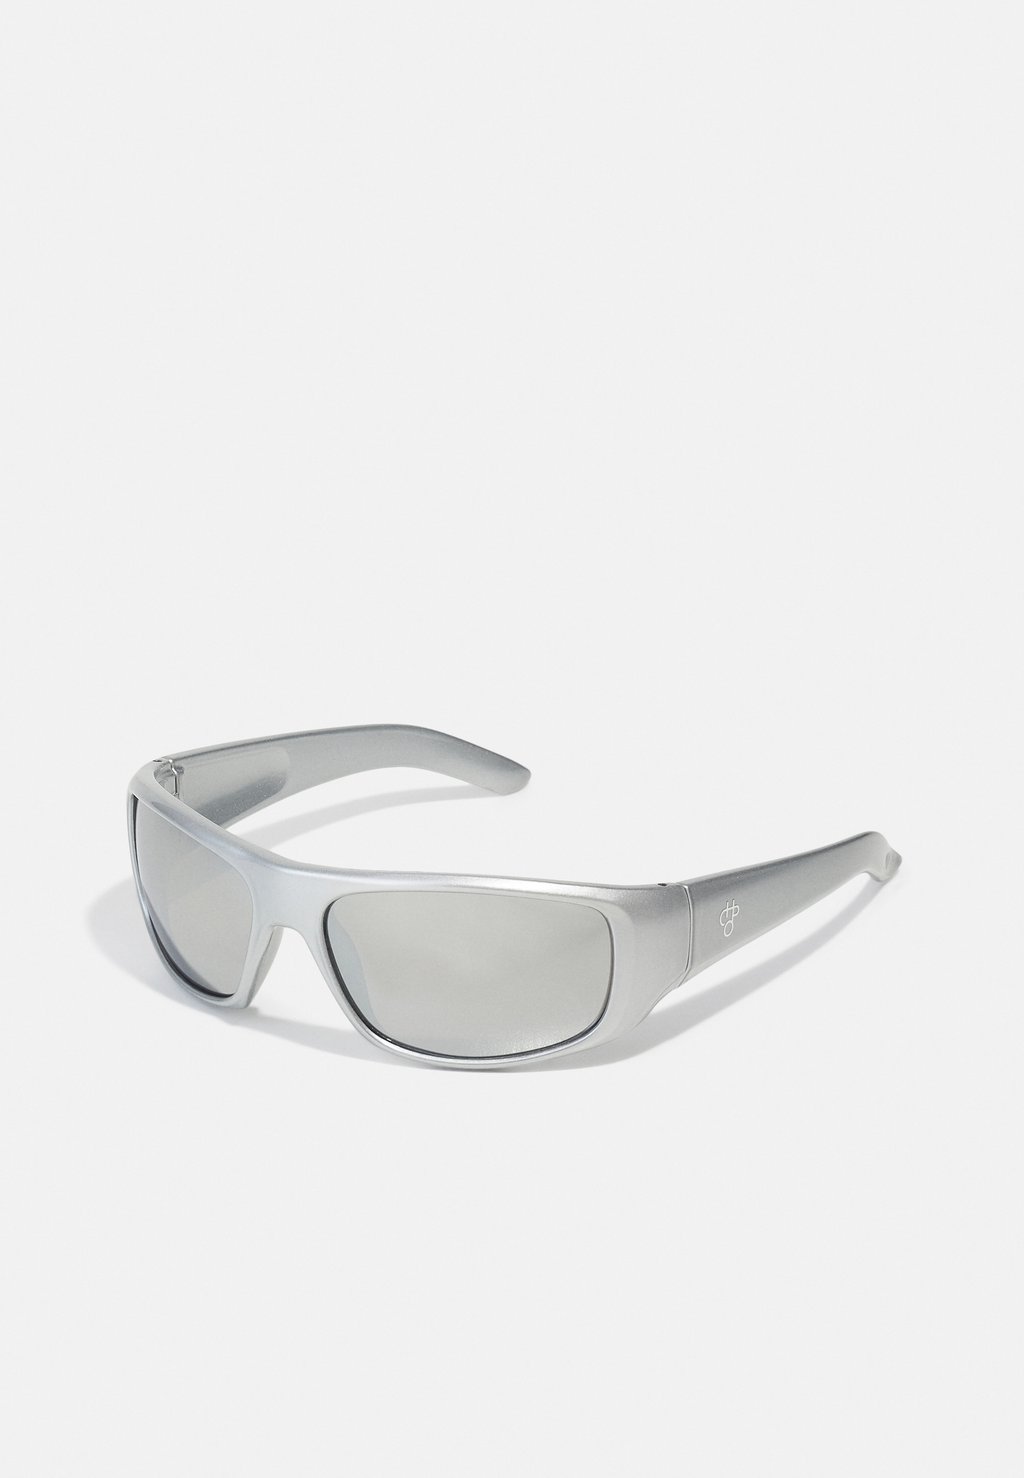 Солнцезащитные очки Ingemar Unisex CHPO, цвет silver-coloured ingemar svantesson mind mapping und gedächtsnistraining